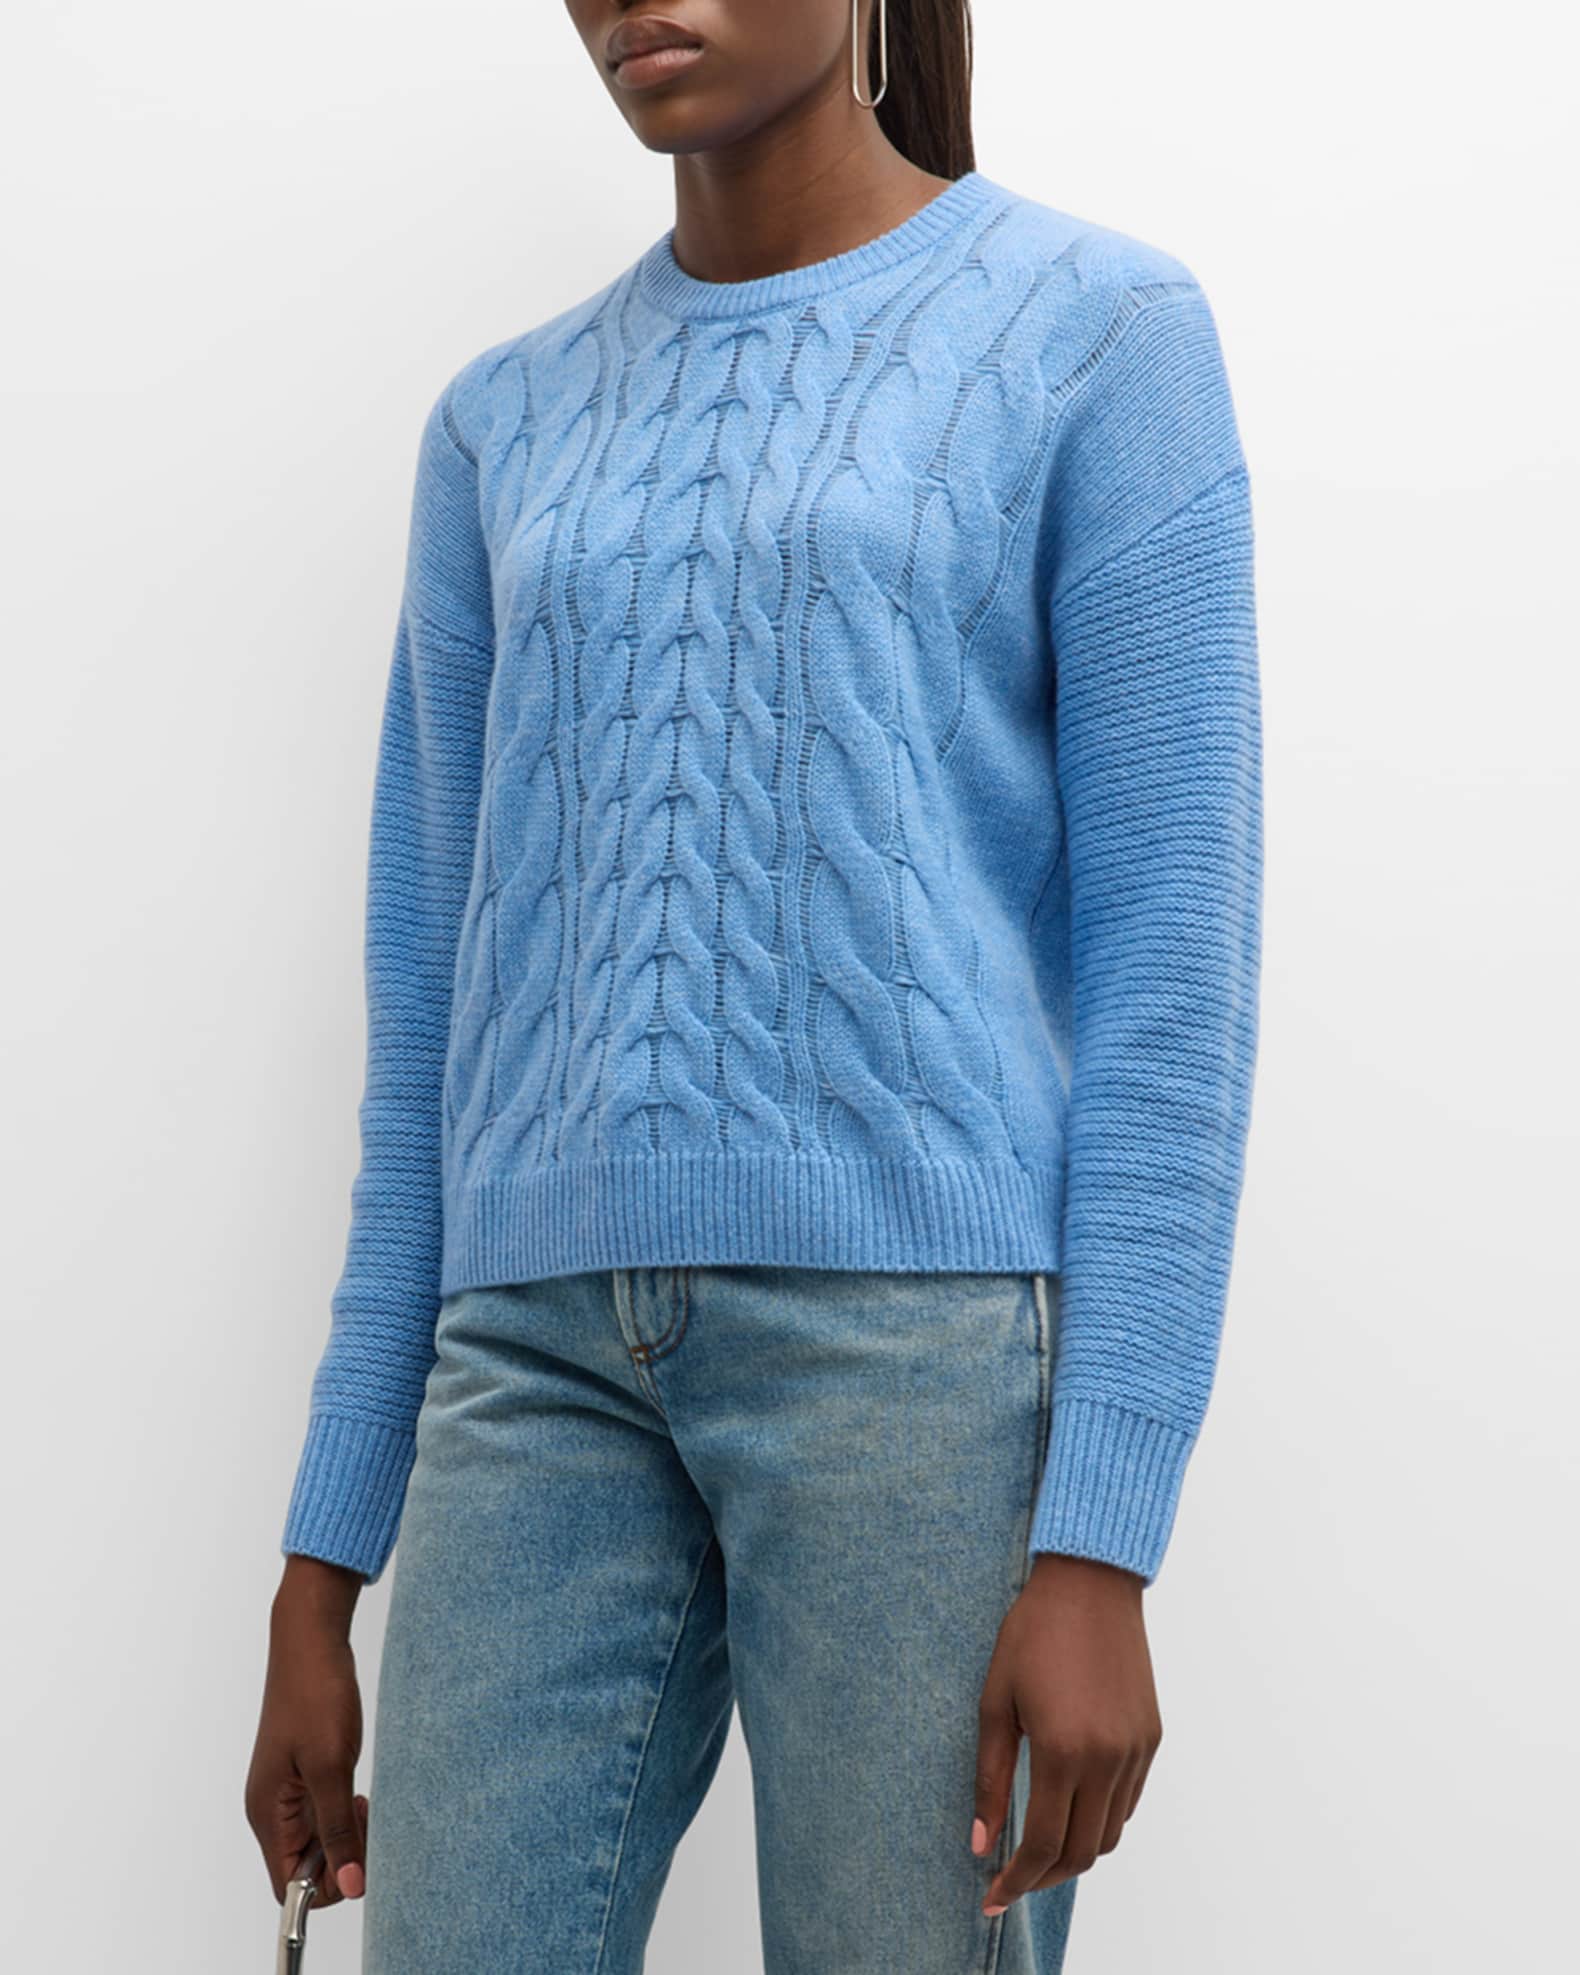 Autumn Cashmere Cashmere Cable-Knit Crewneck Sweater, Sapphire, Women's, S, Sweaters Cashmere Sweaters